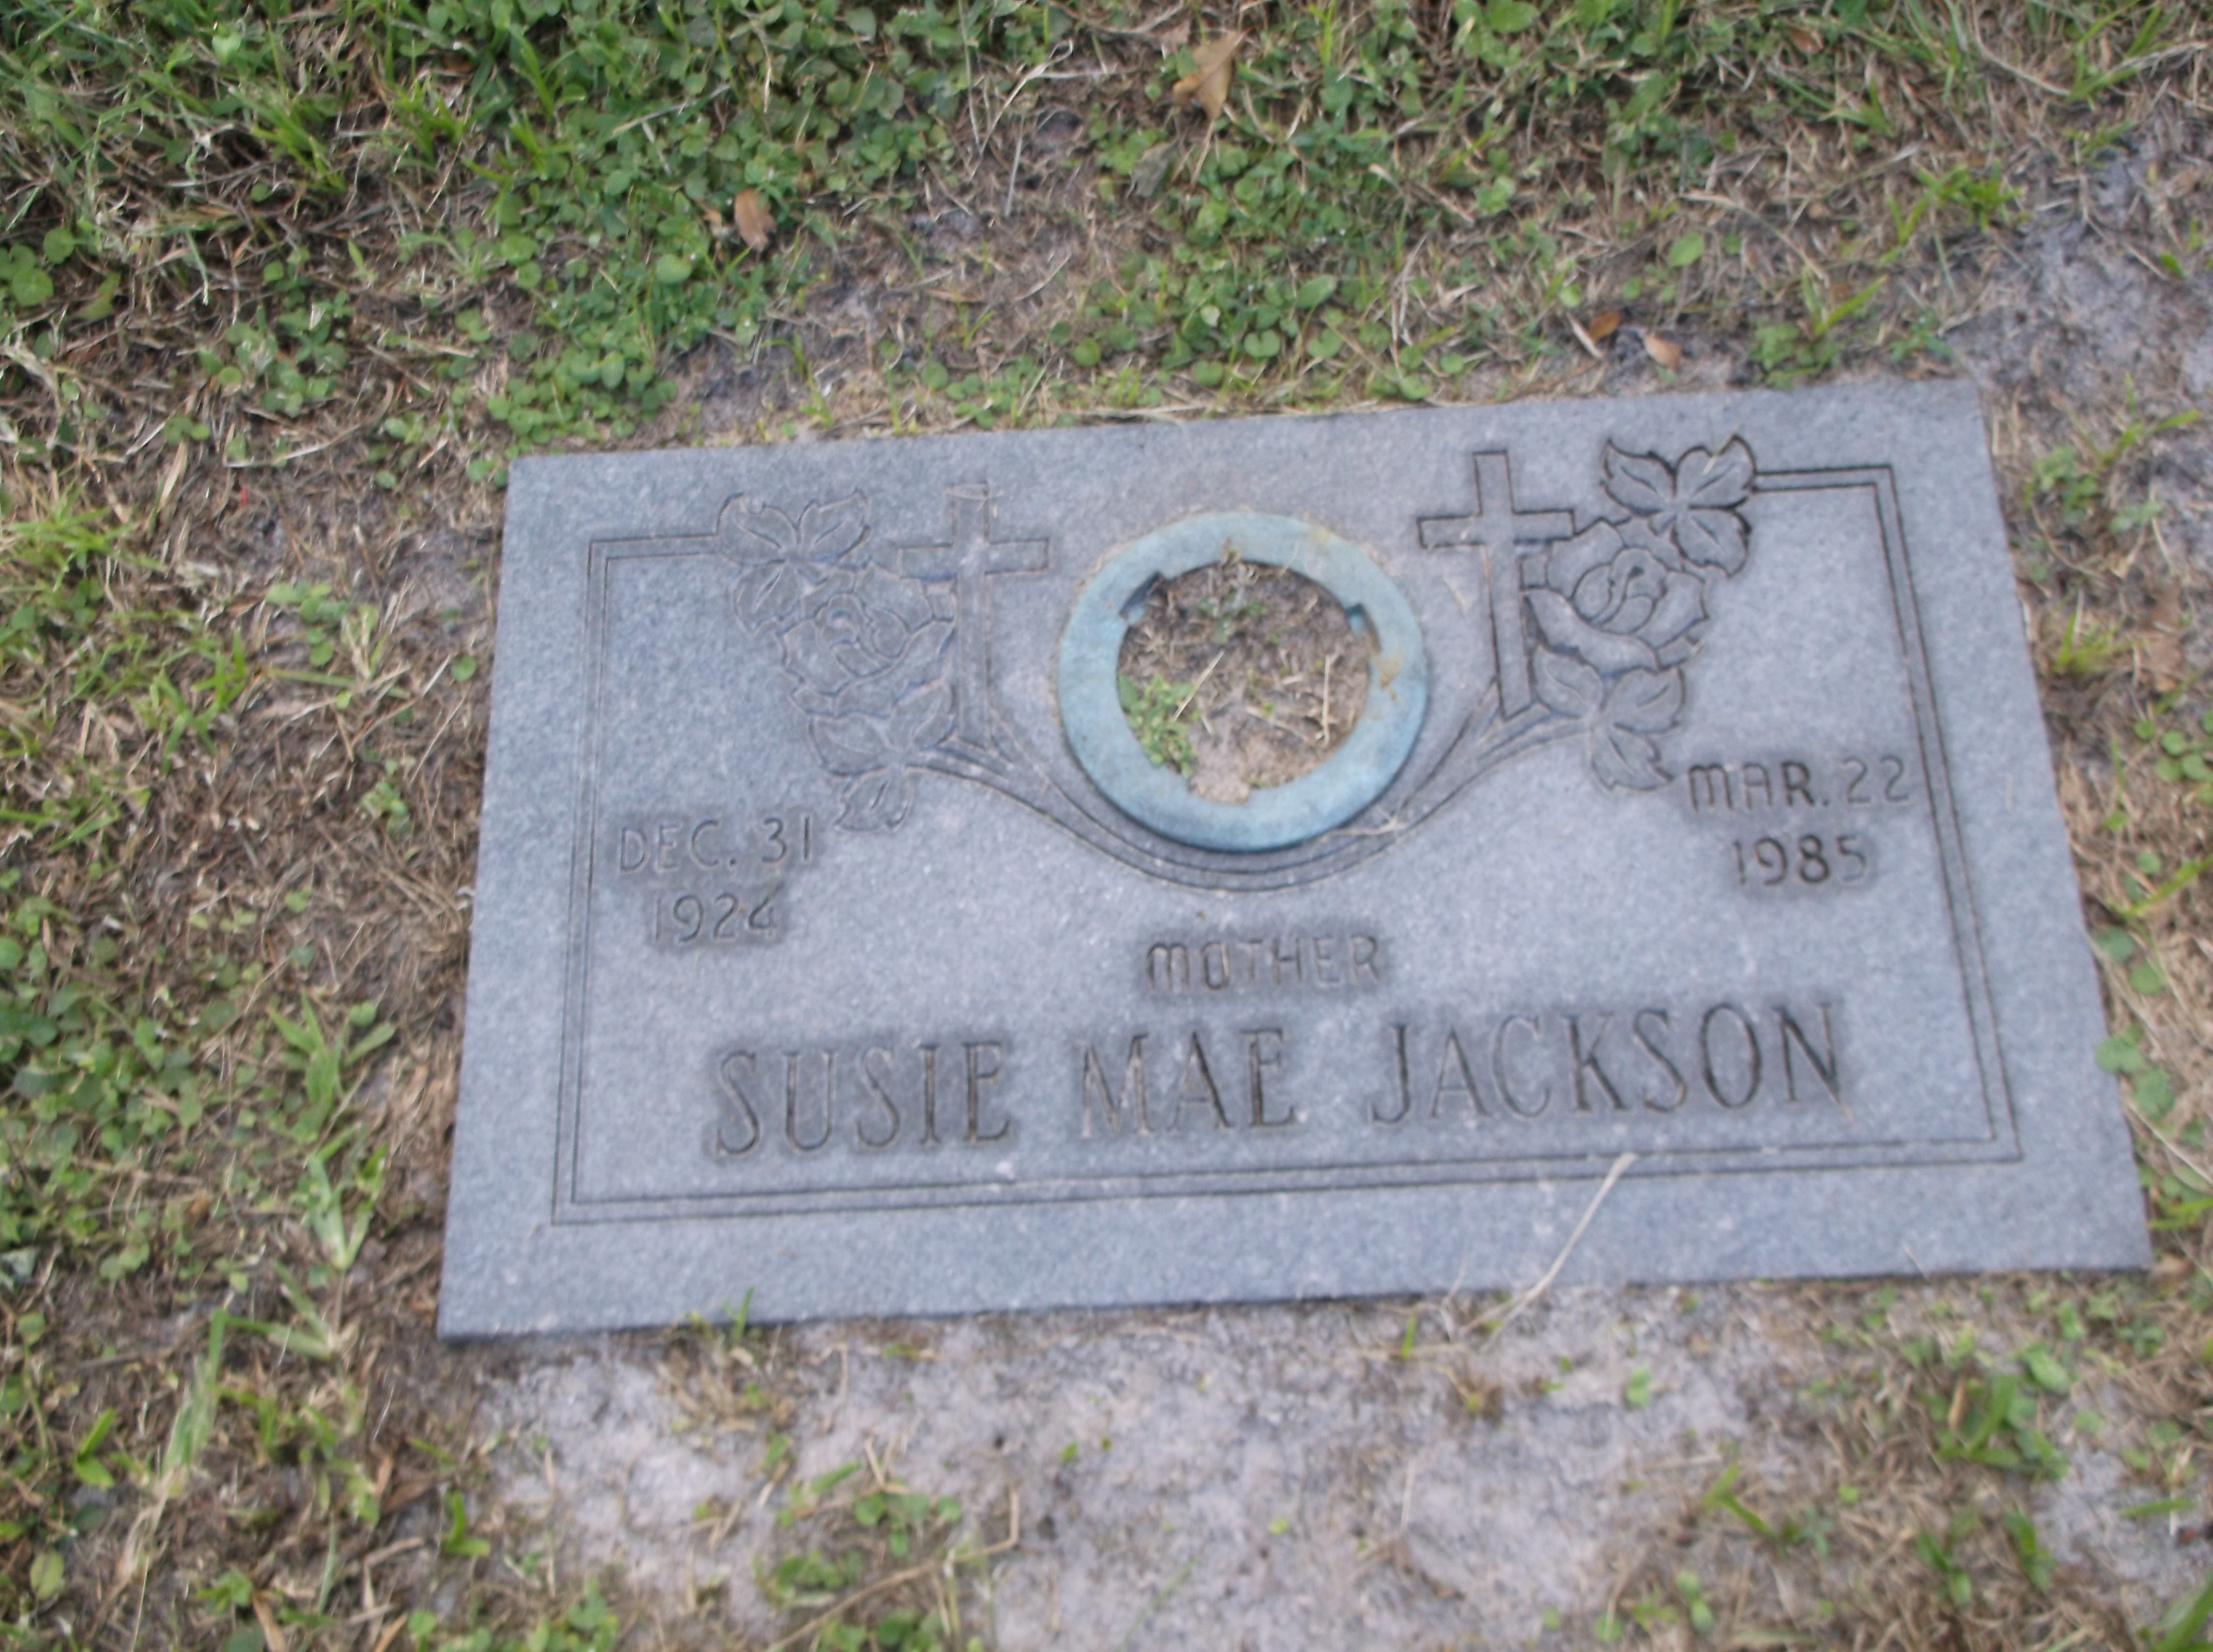 Susie Mae Jackson